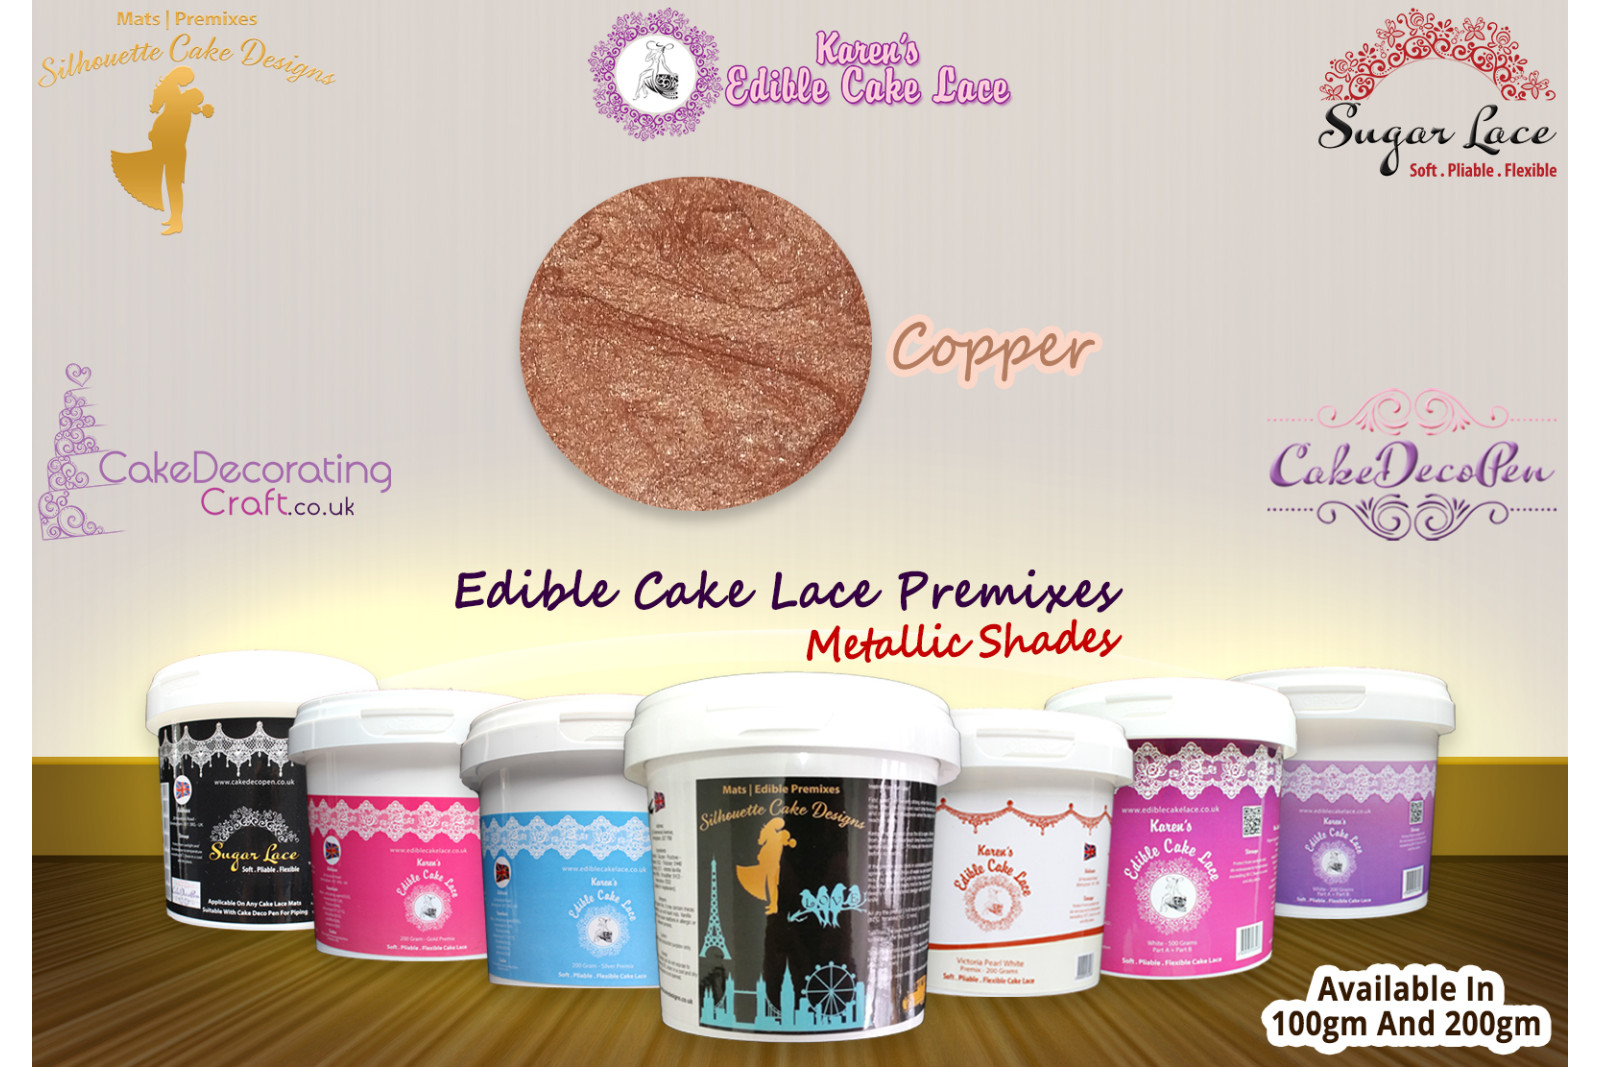 Copper Colour | Karens Edible Cake Lace Premixes | Metallic Shade | 200 Grams | Christmas Edible Decorating Essential